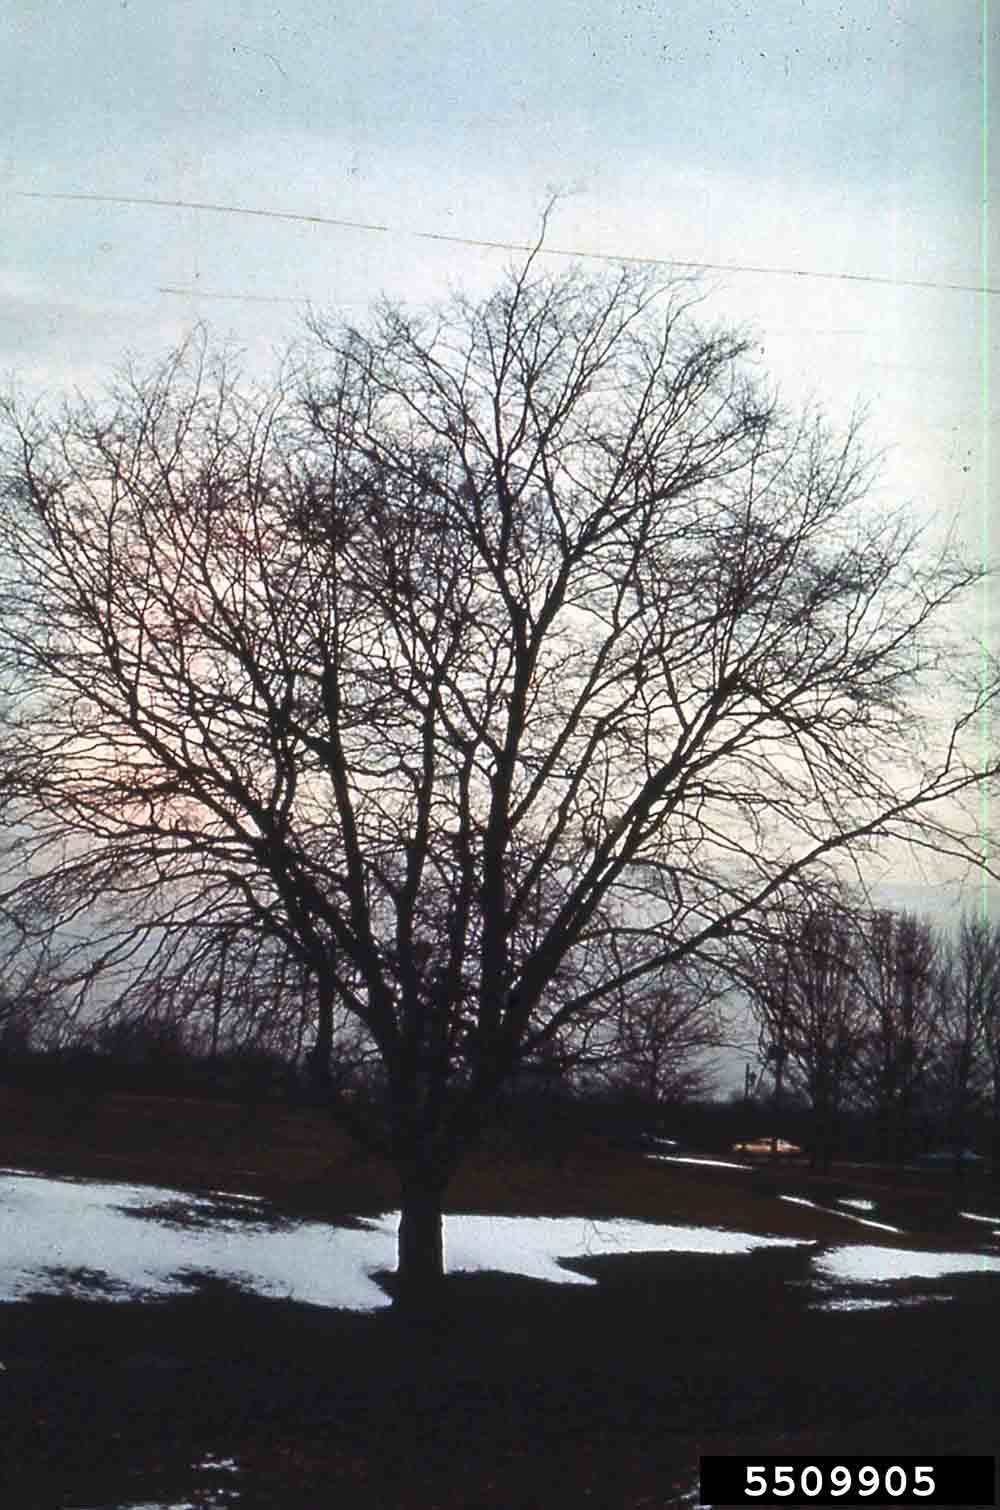 American hop hornbeam tree habit, winter